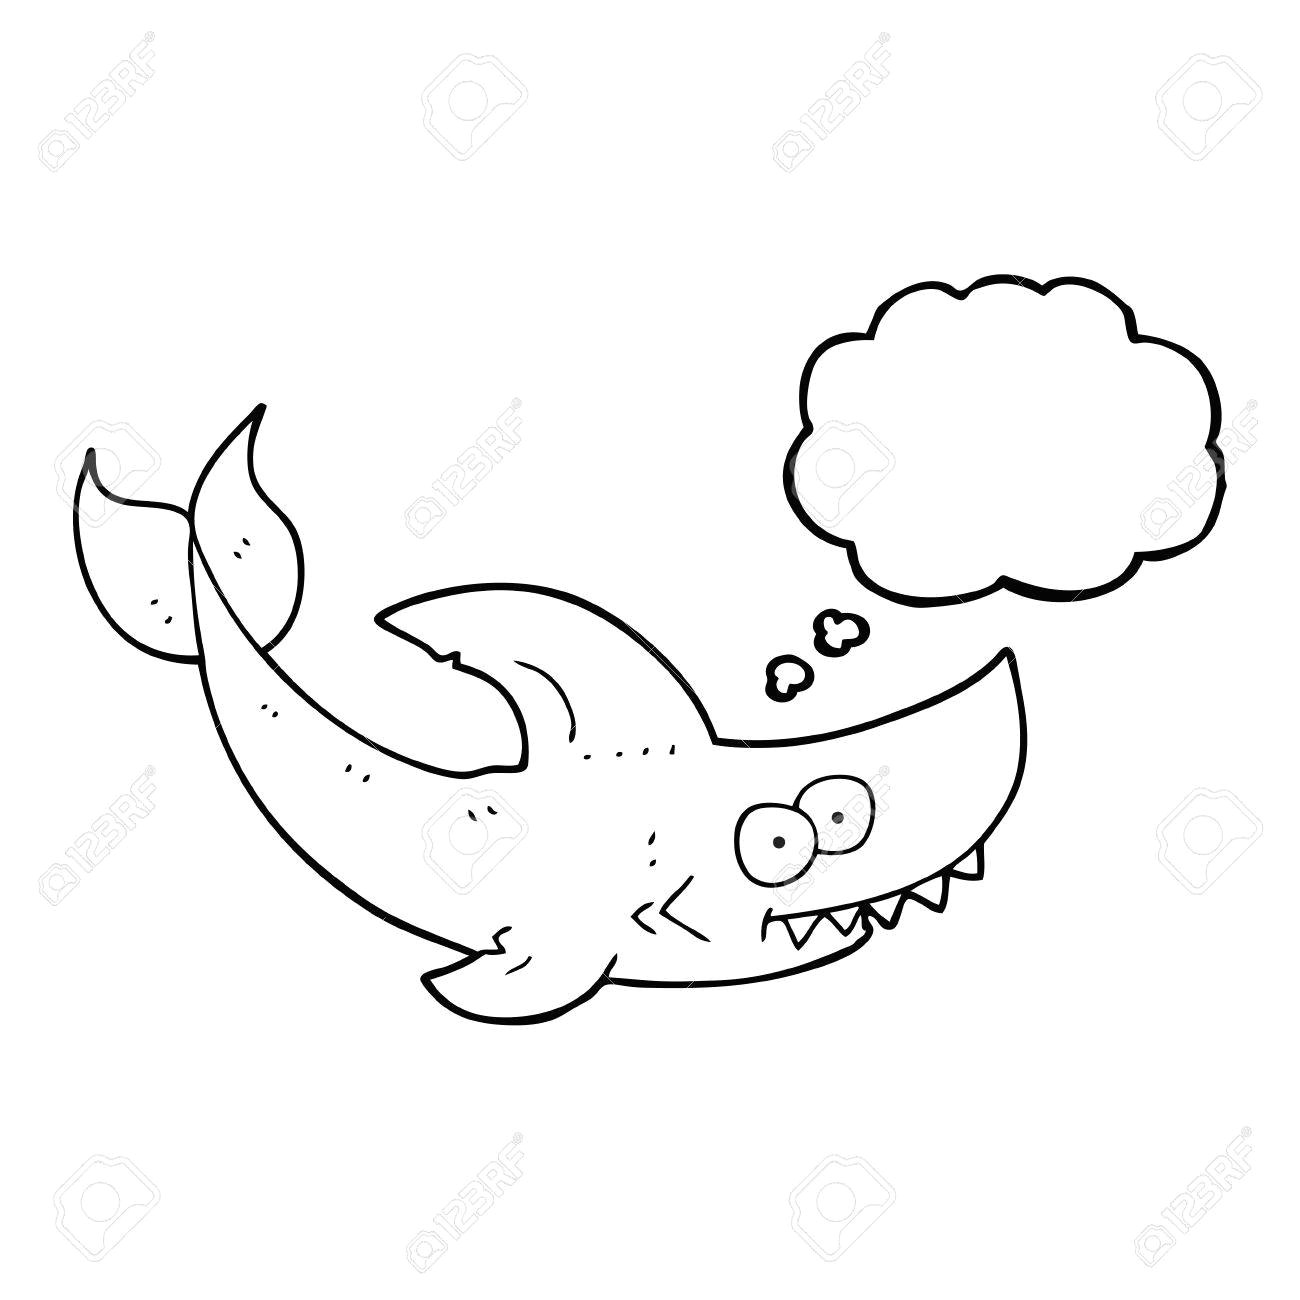 Drawing A Cartoon Shark Freehand Drawn thought Bubble Cartoon Shark Royalty Free Cliparts